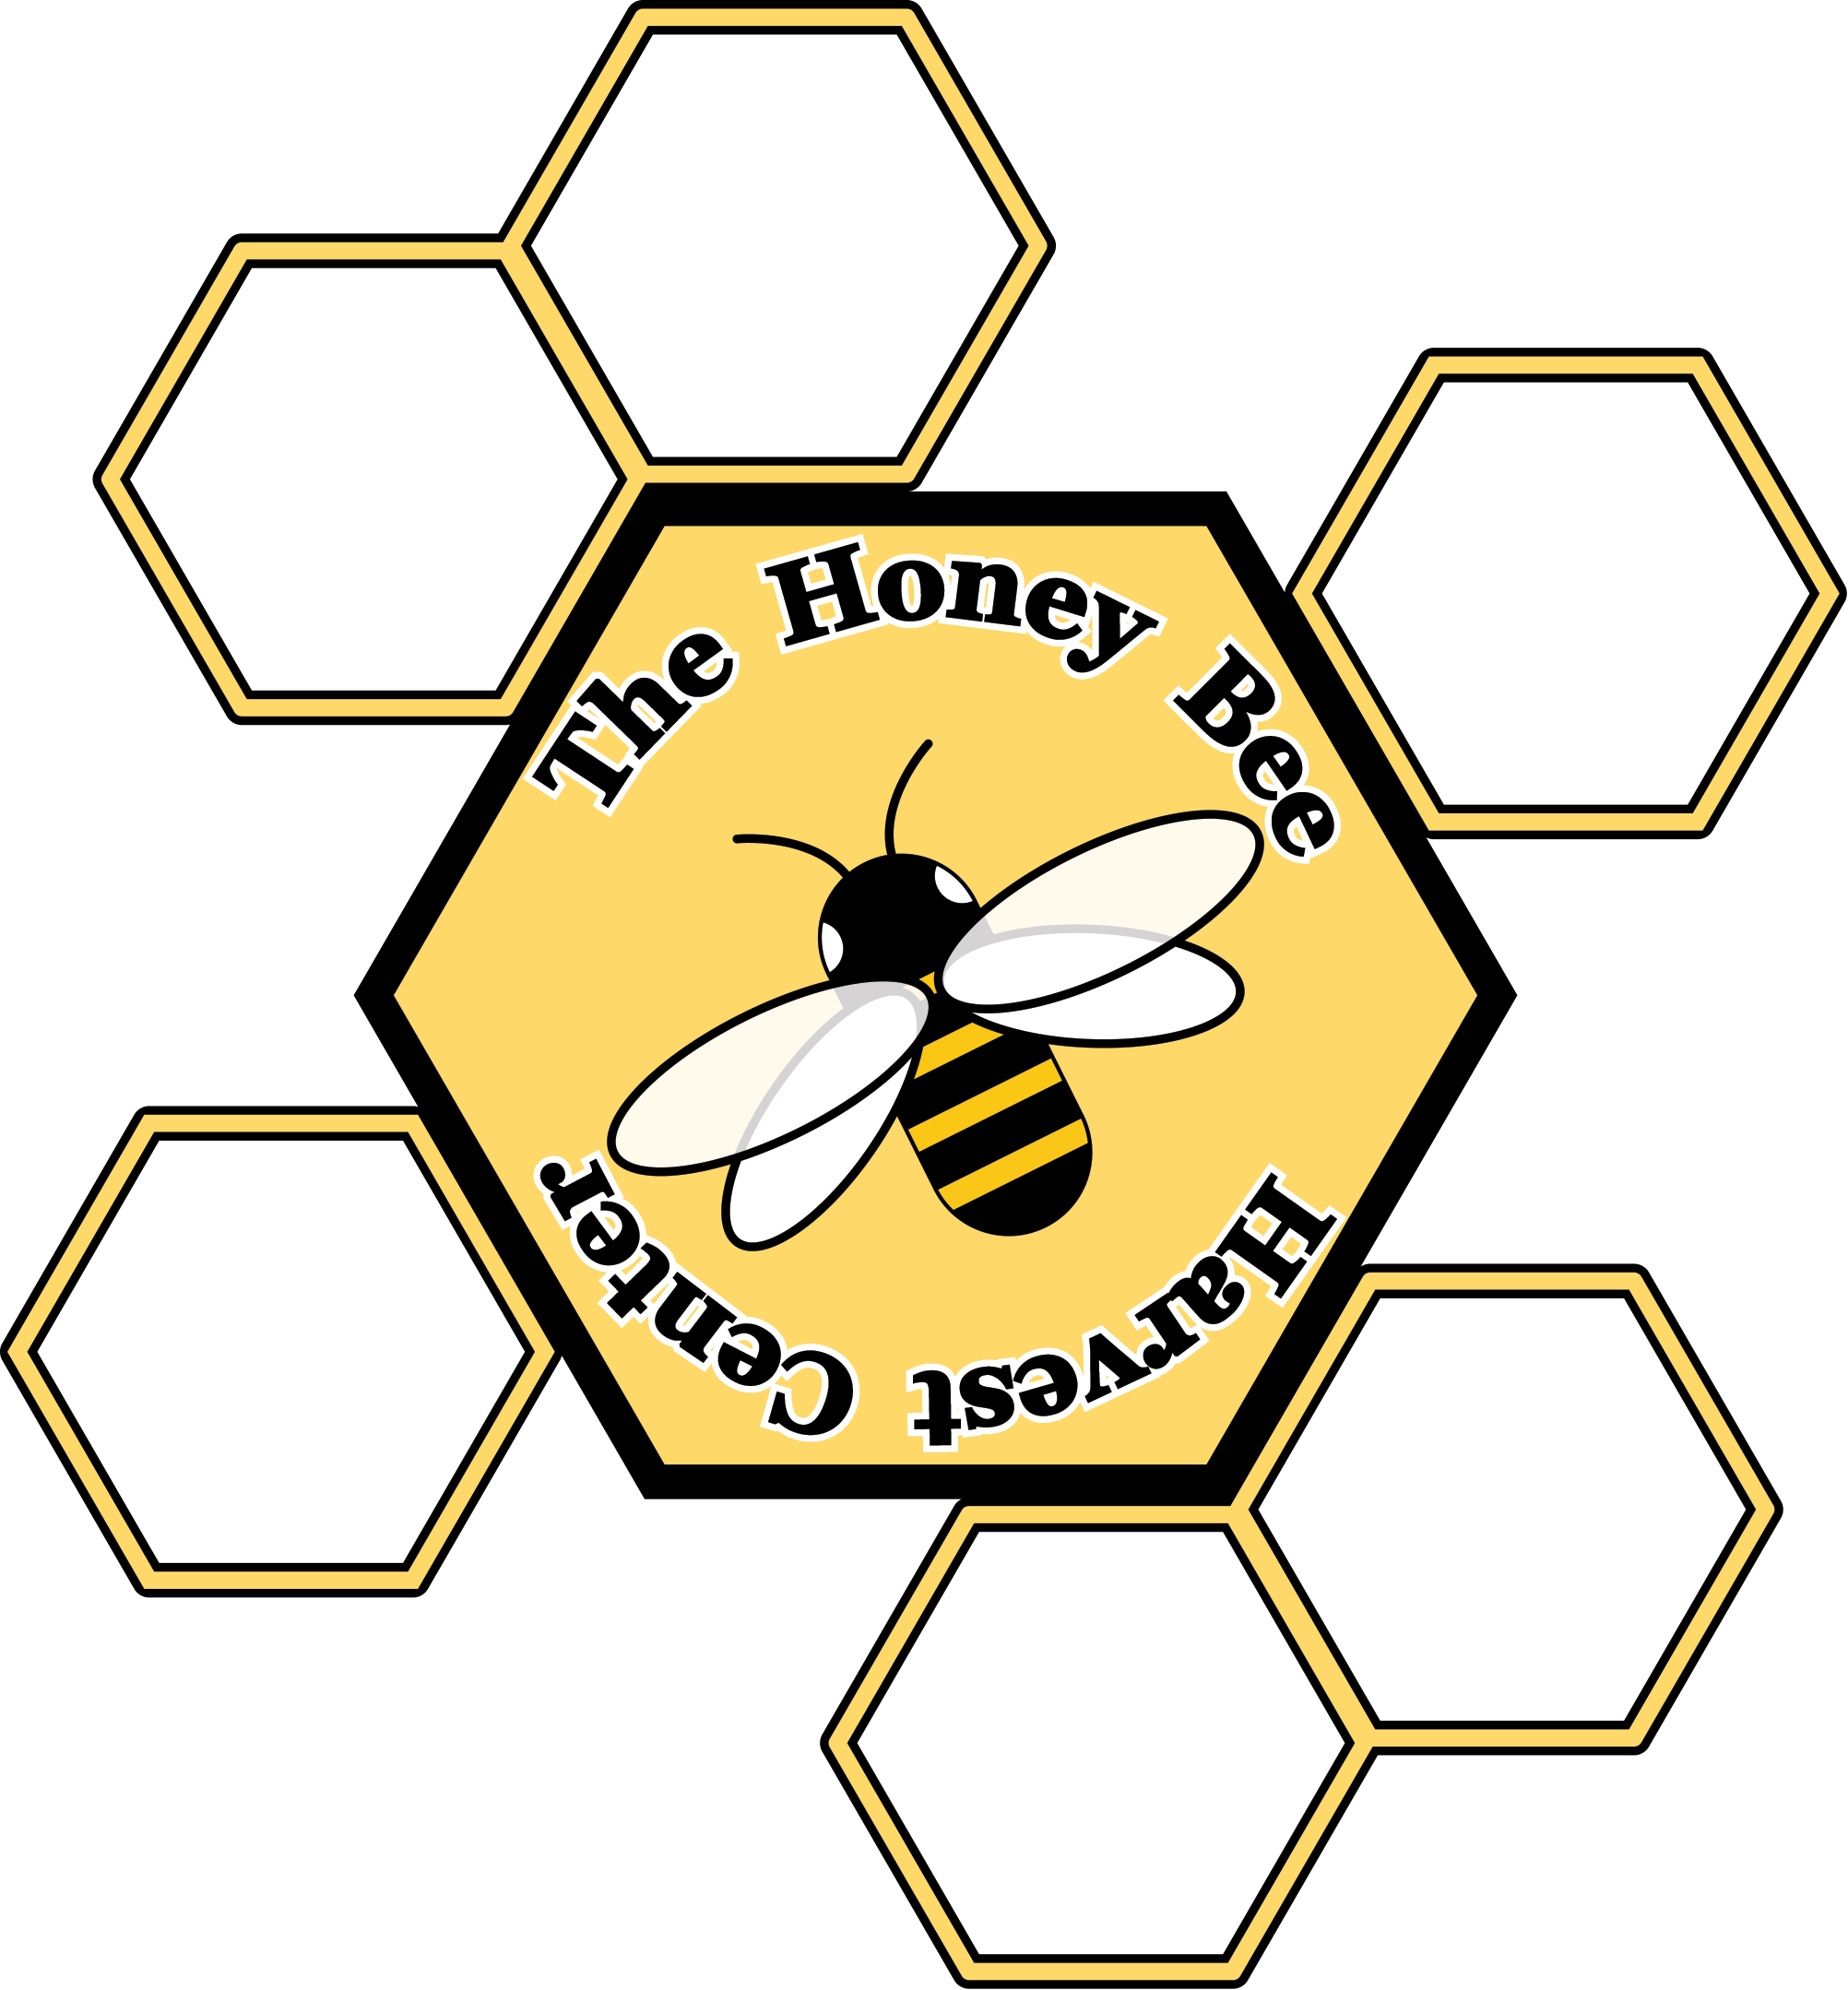 Image - The Honey Bee Harvest Center